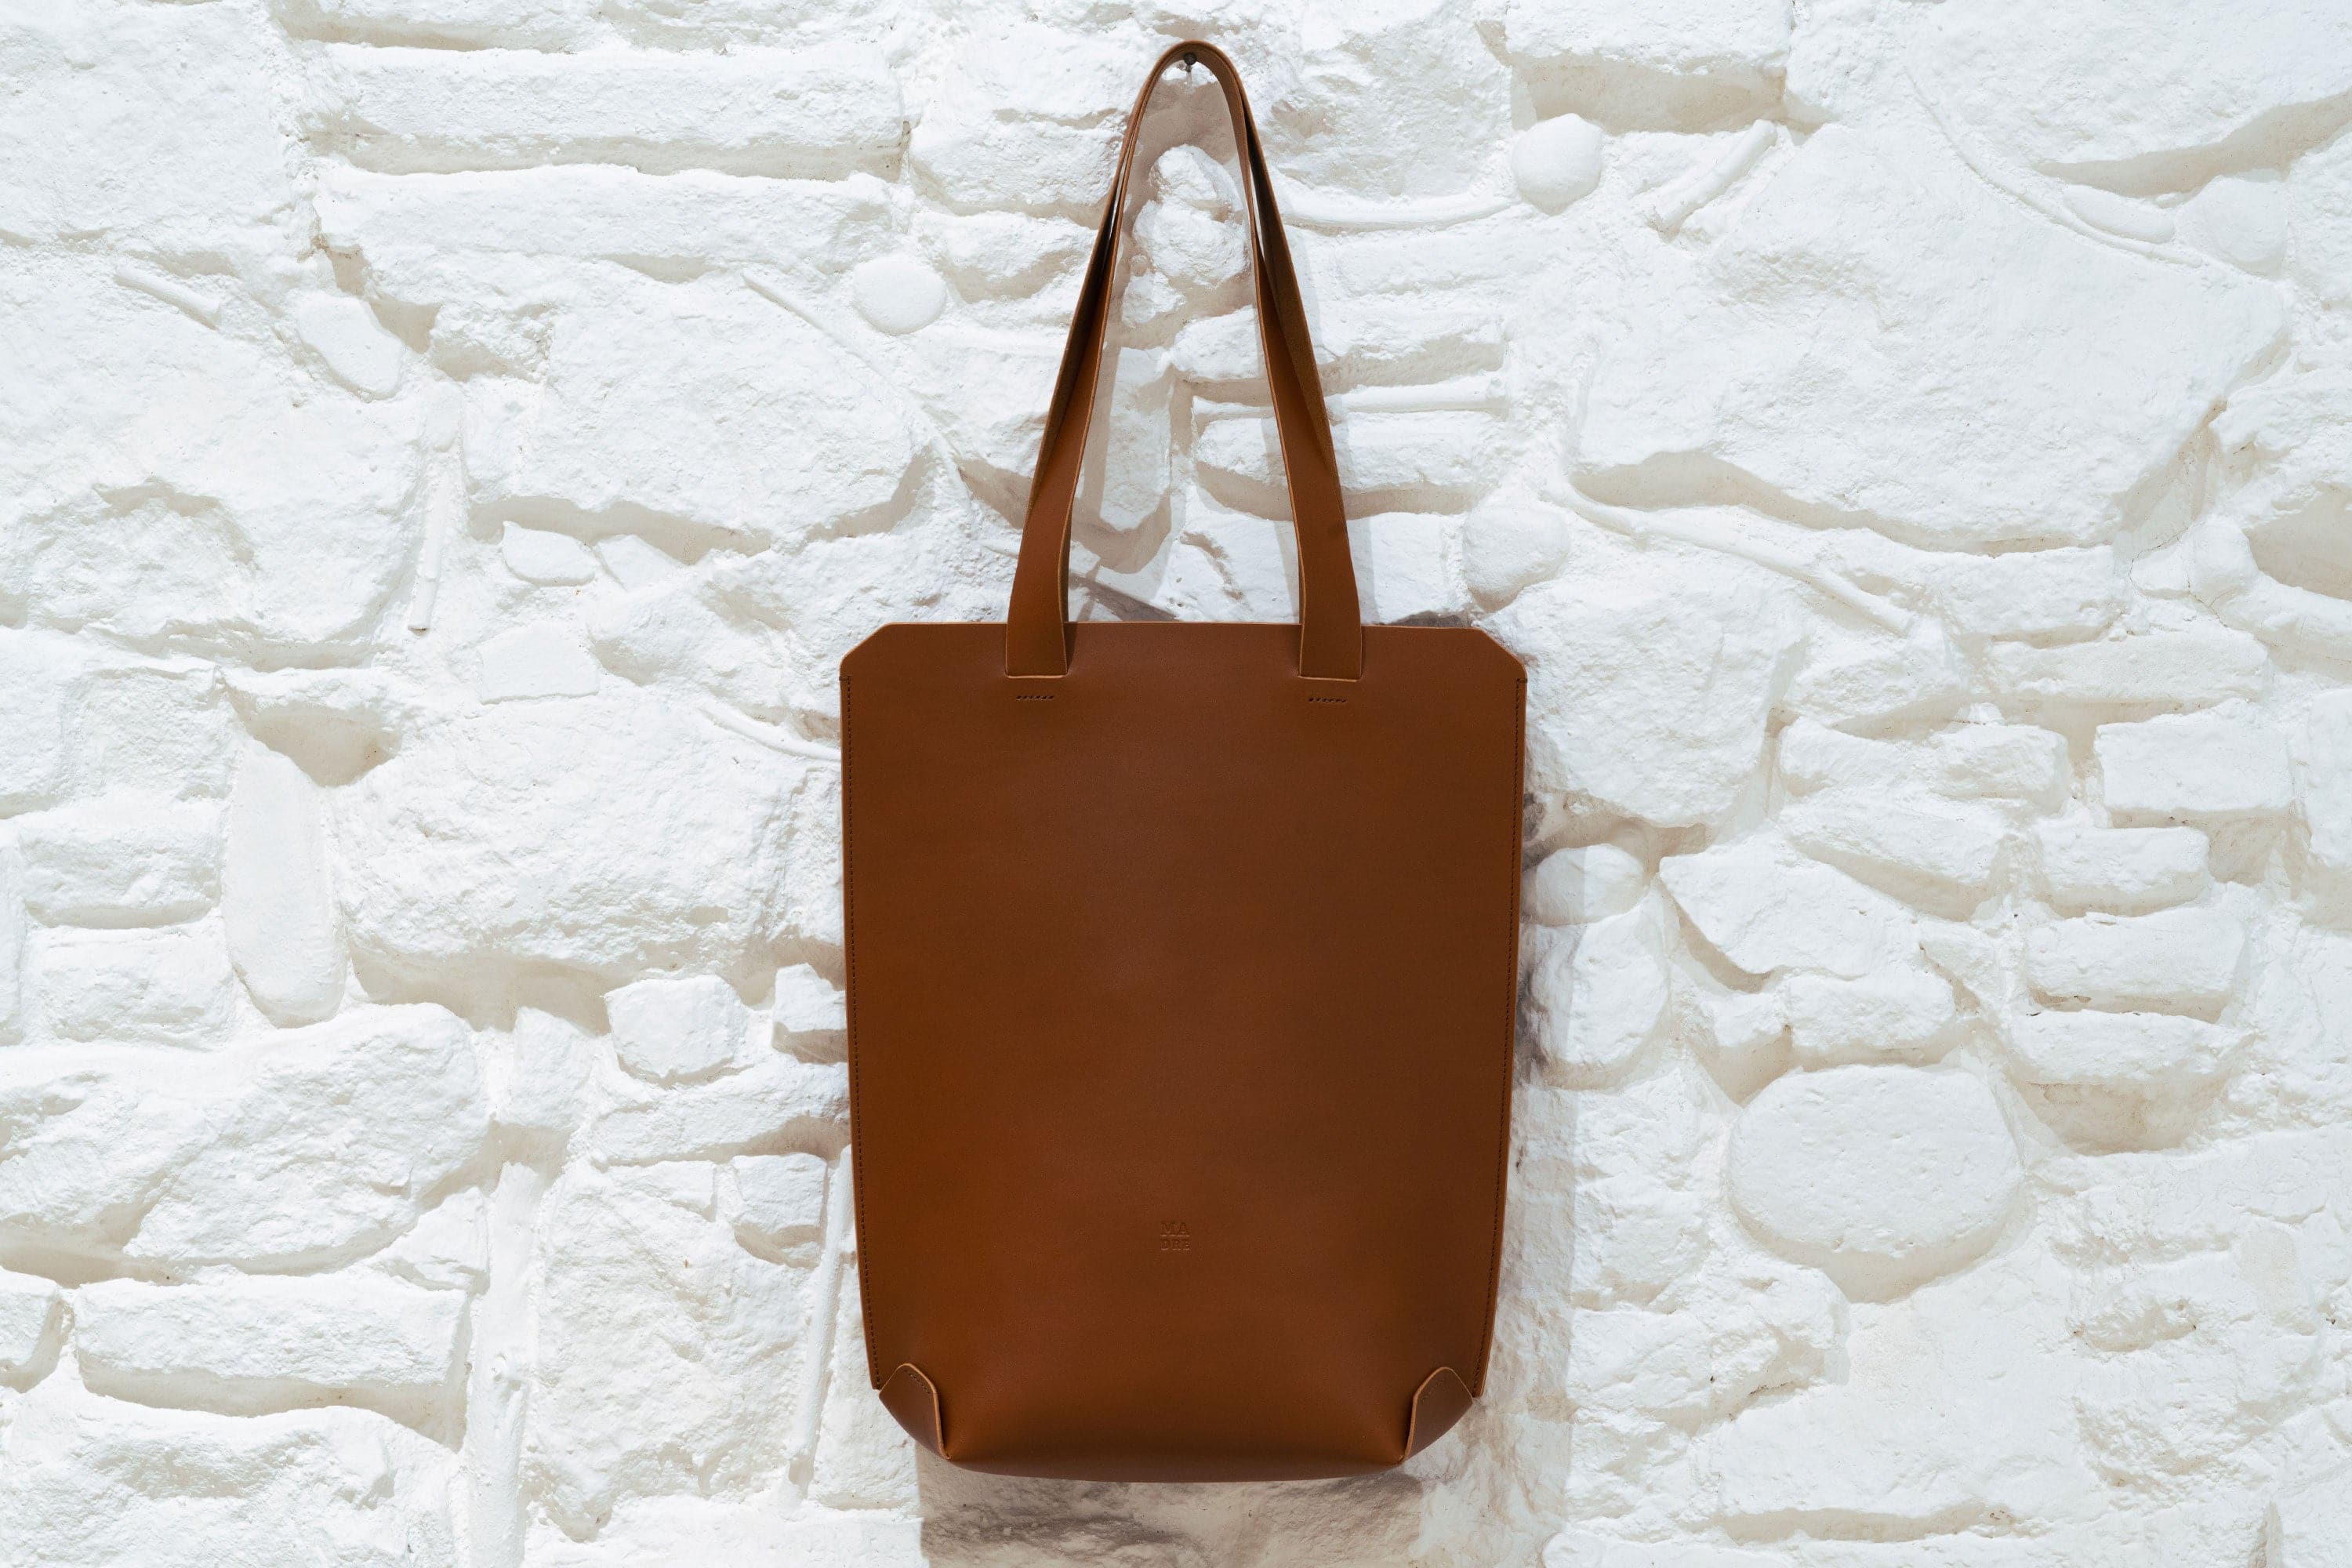 Tote Bag Brown Leather Long Version Vachetta Leather Minimal Pure Design By Manuel Dreesmann Atelier Madre Barcelona Spain